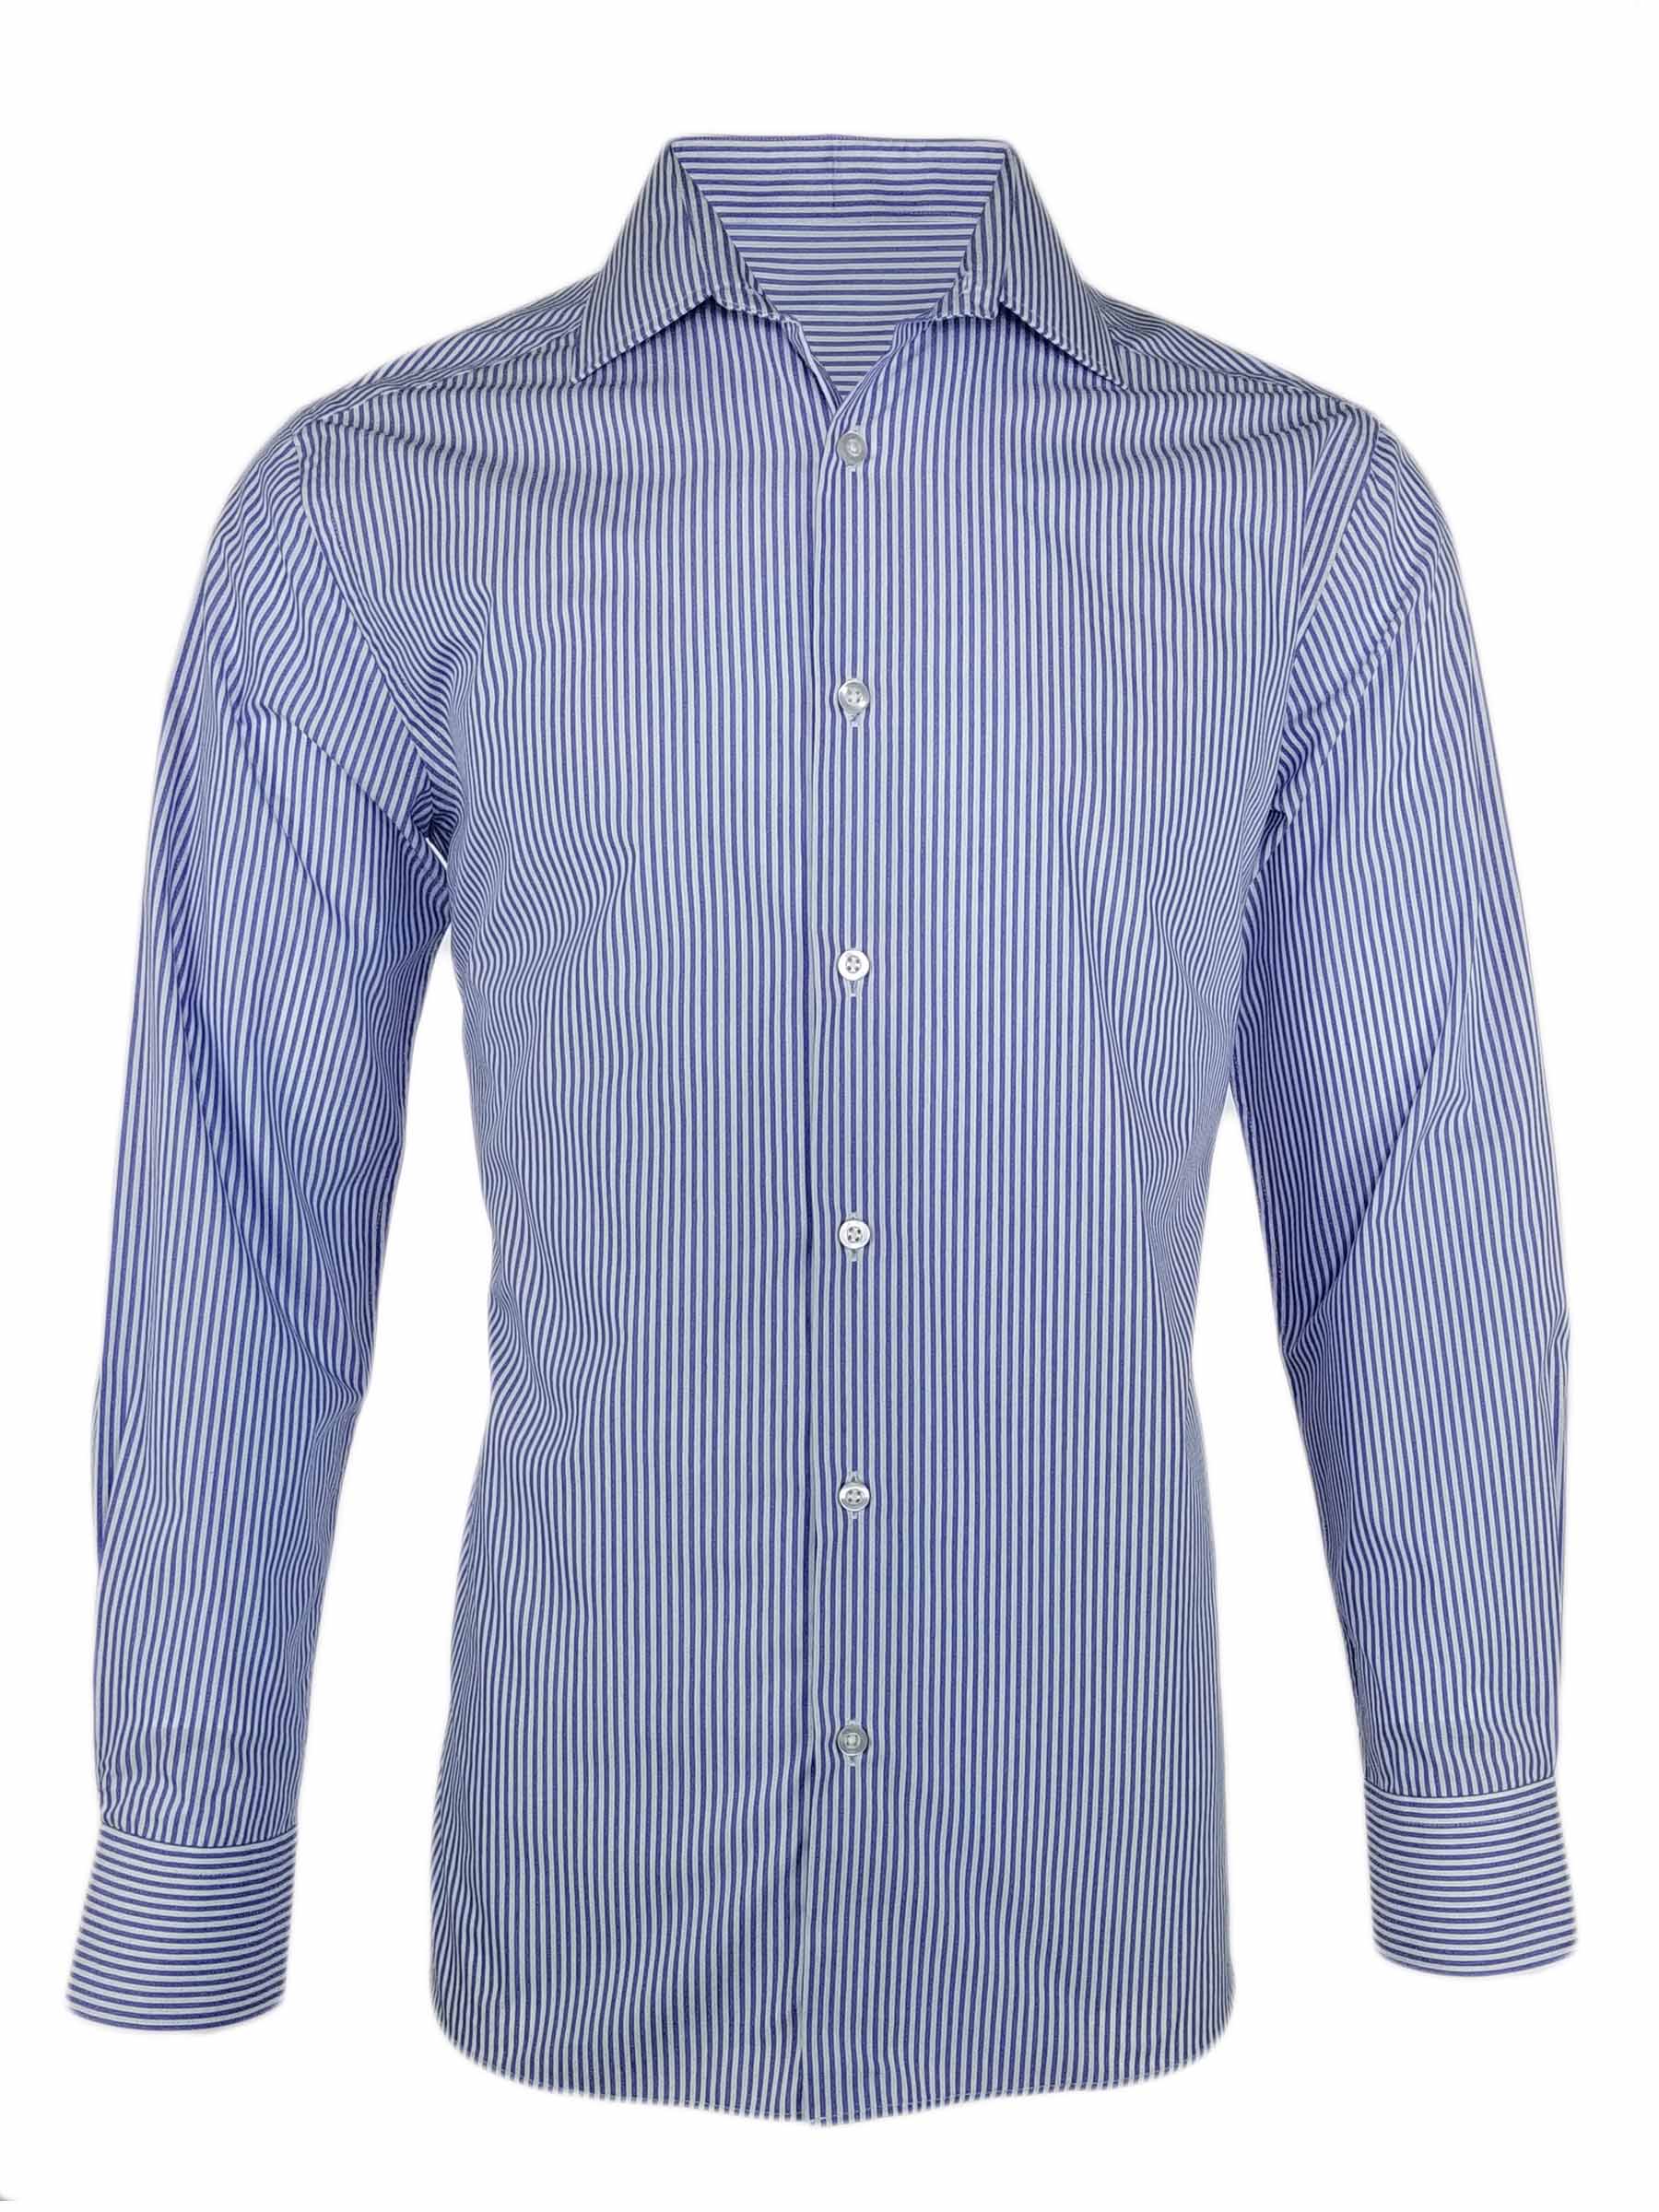 Men's Milan Shirt - Cobalt Blue and White Stripe Long Sleeve - Uniform Edit